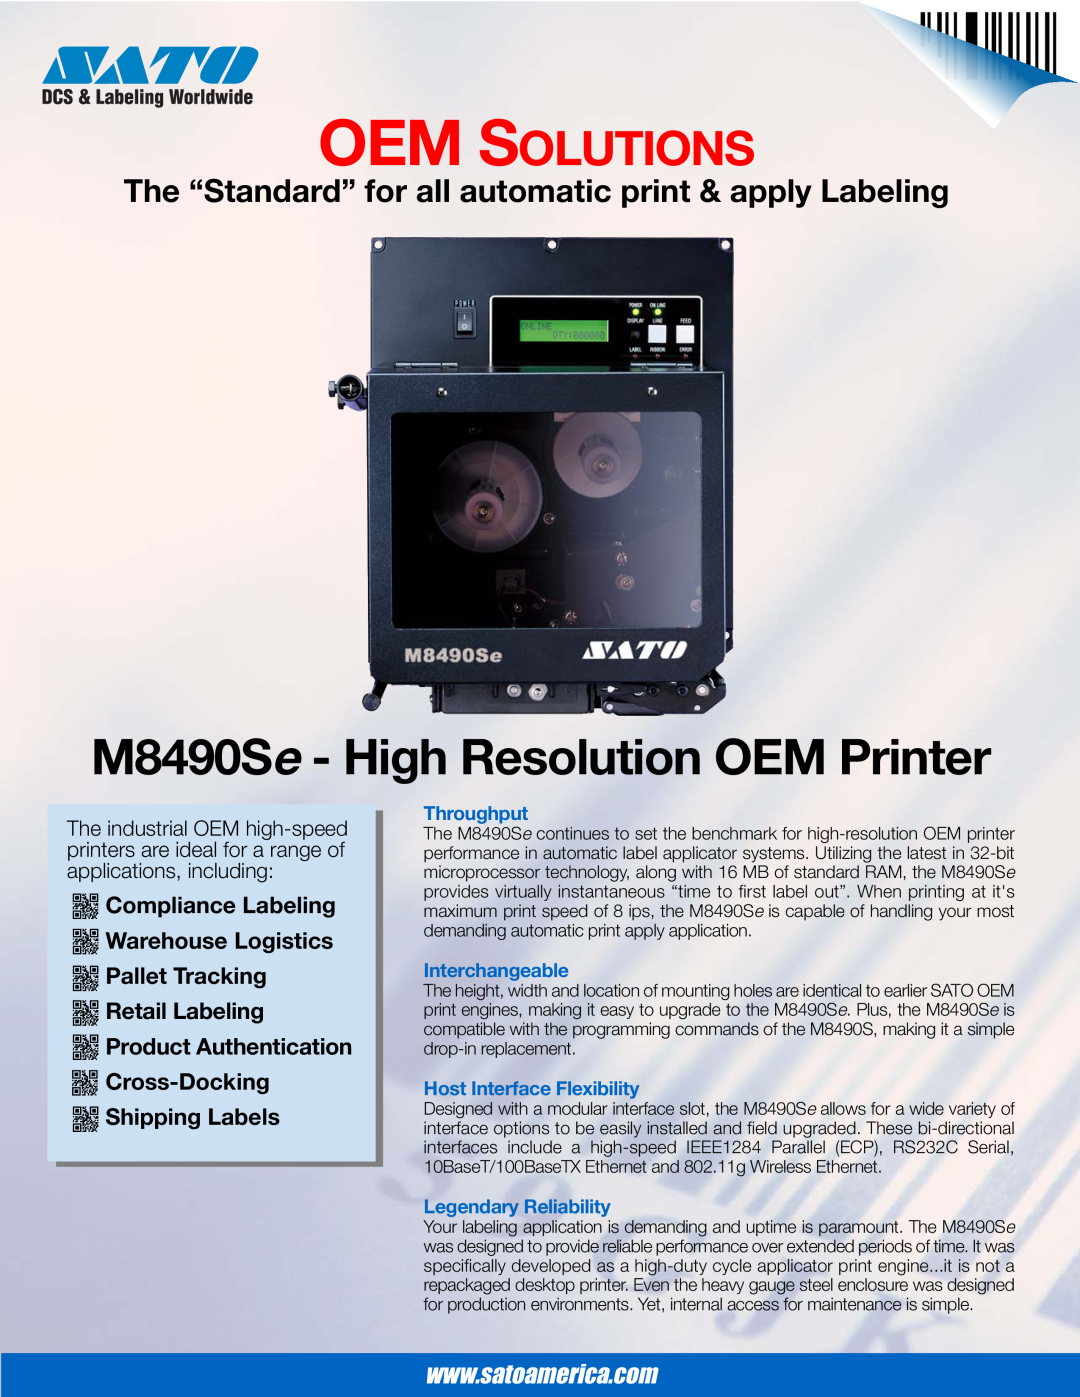 SATO manual M8490Se - High Resolution OEM Printer, Oem Solutions, Throughput, Interchangeable, Legendary Reliability 